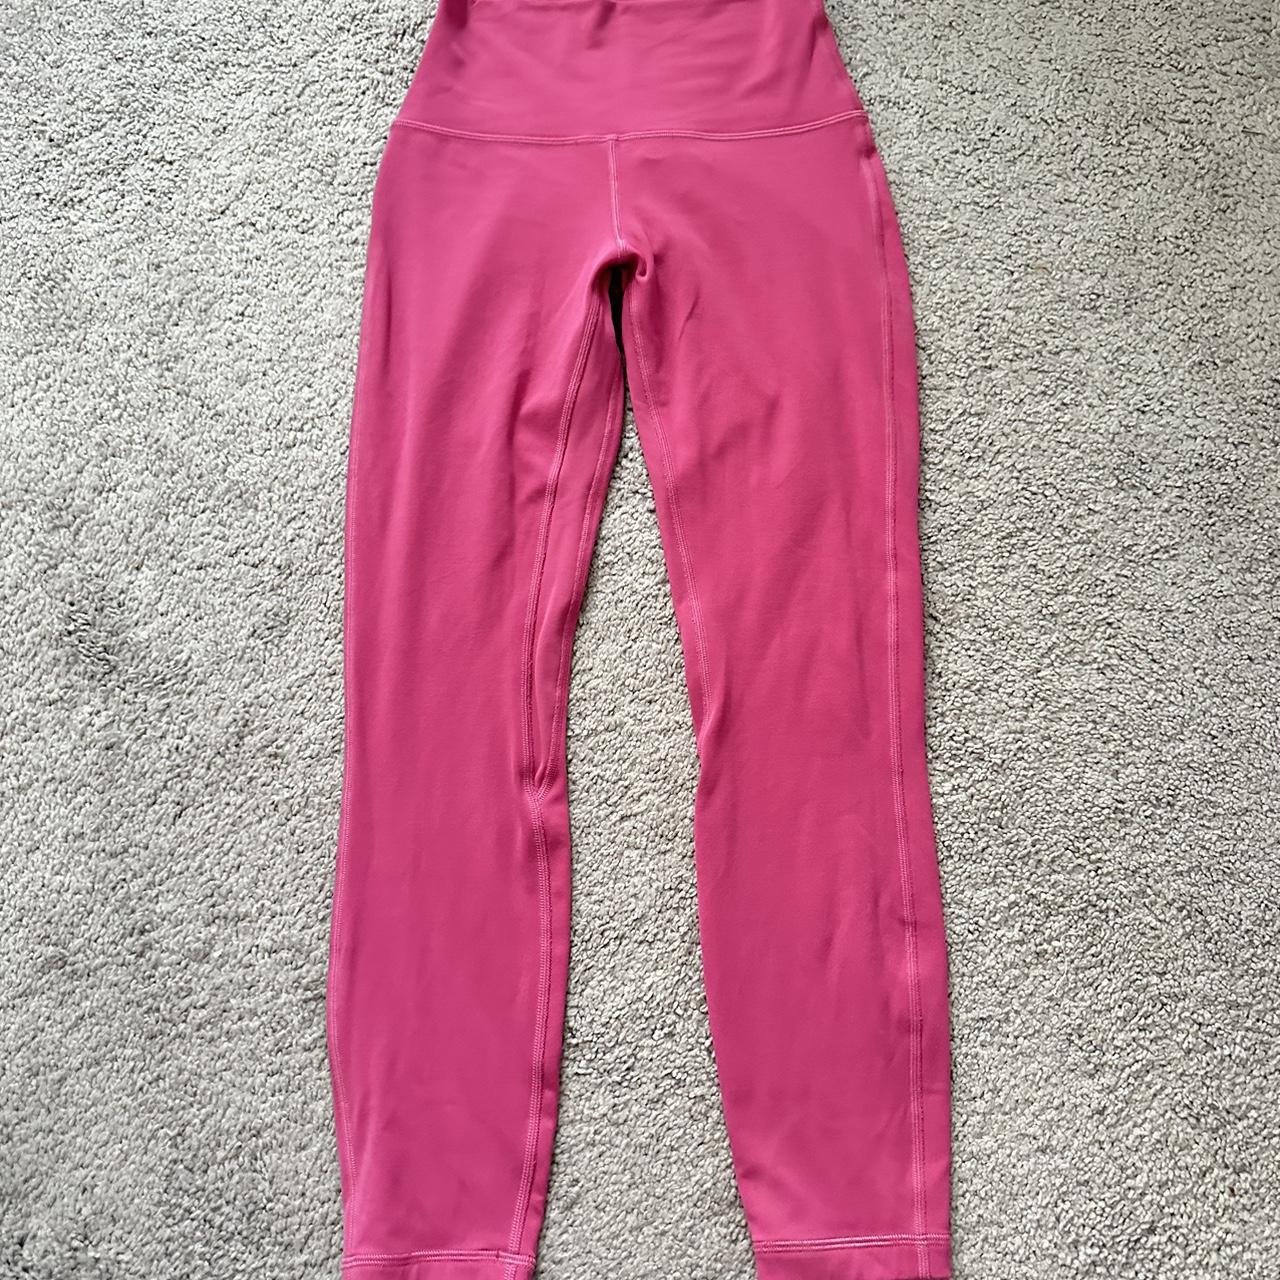 Lululemon Align leggings 25’ (discontinued color)